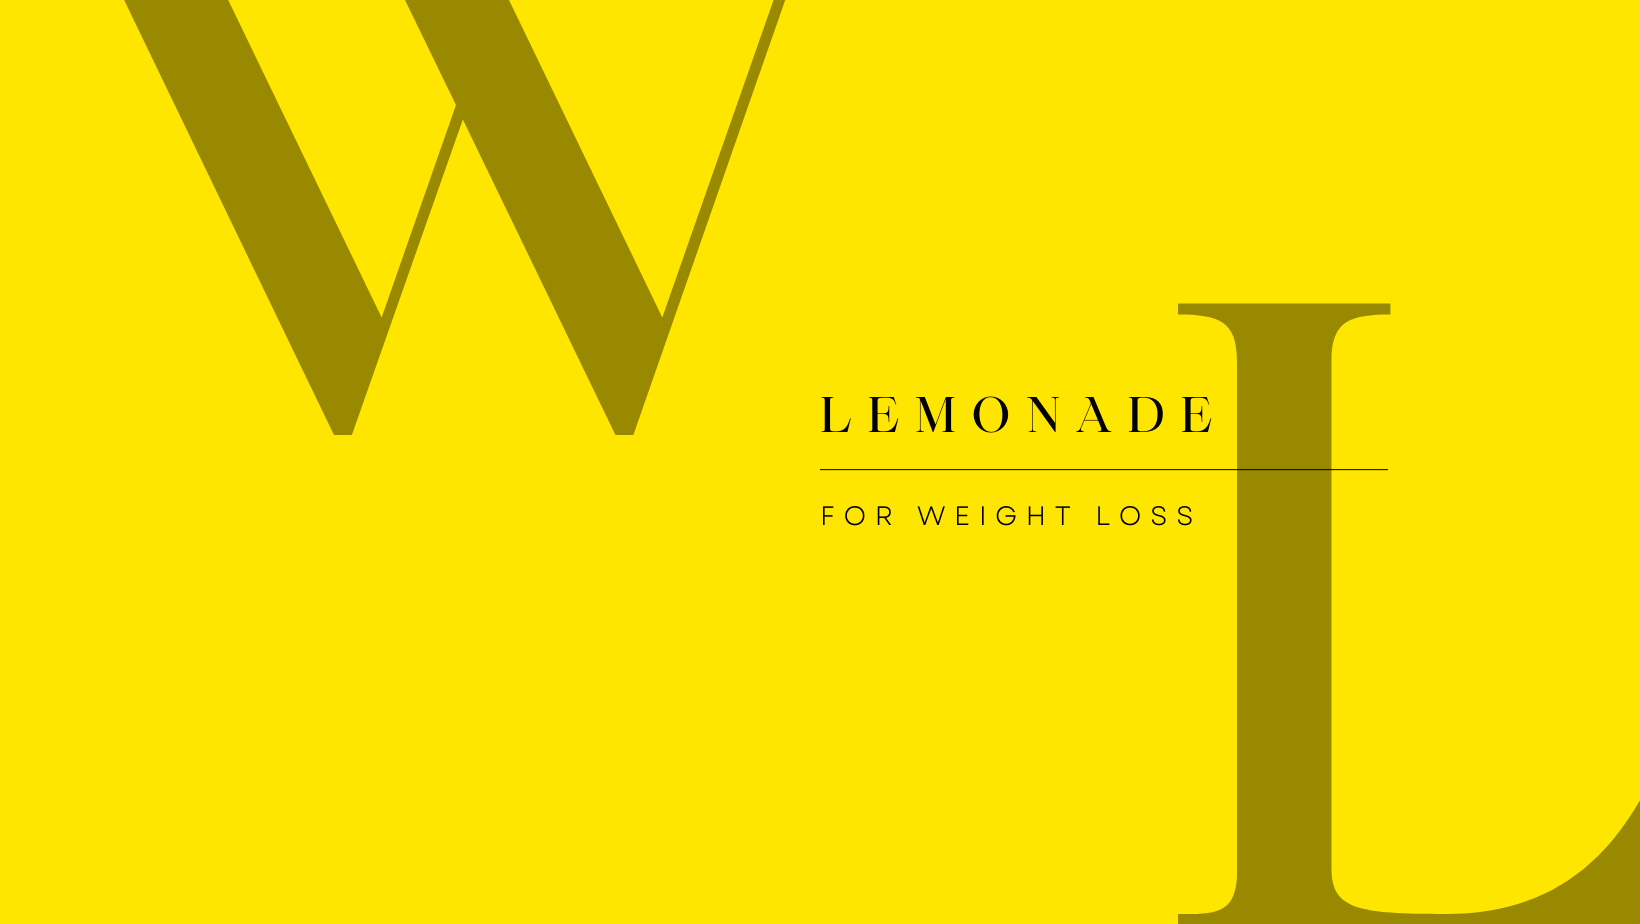 Lemonade for Weight Loss